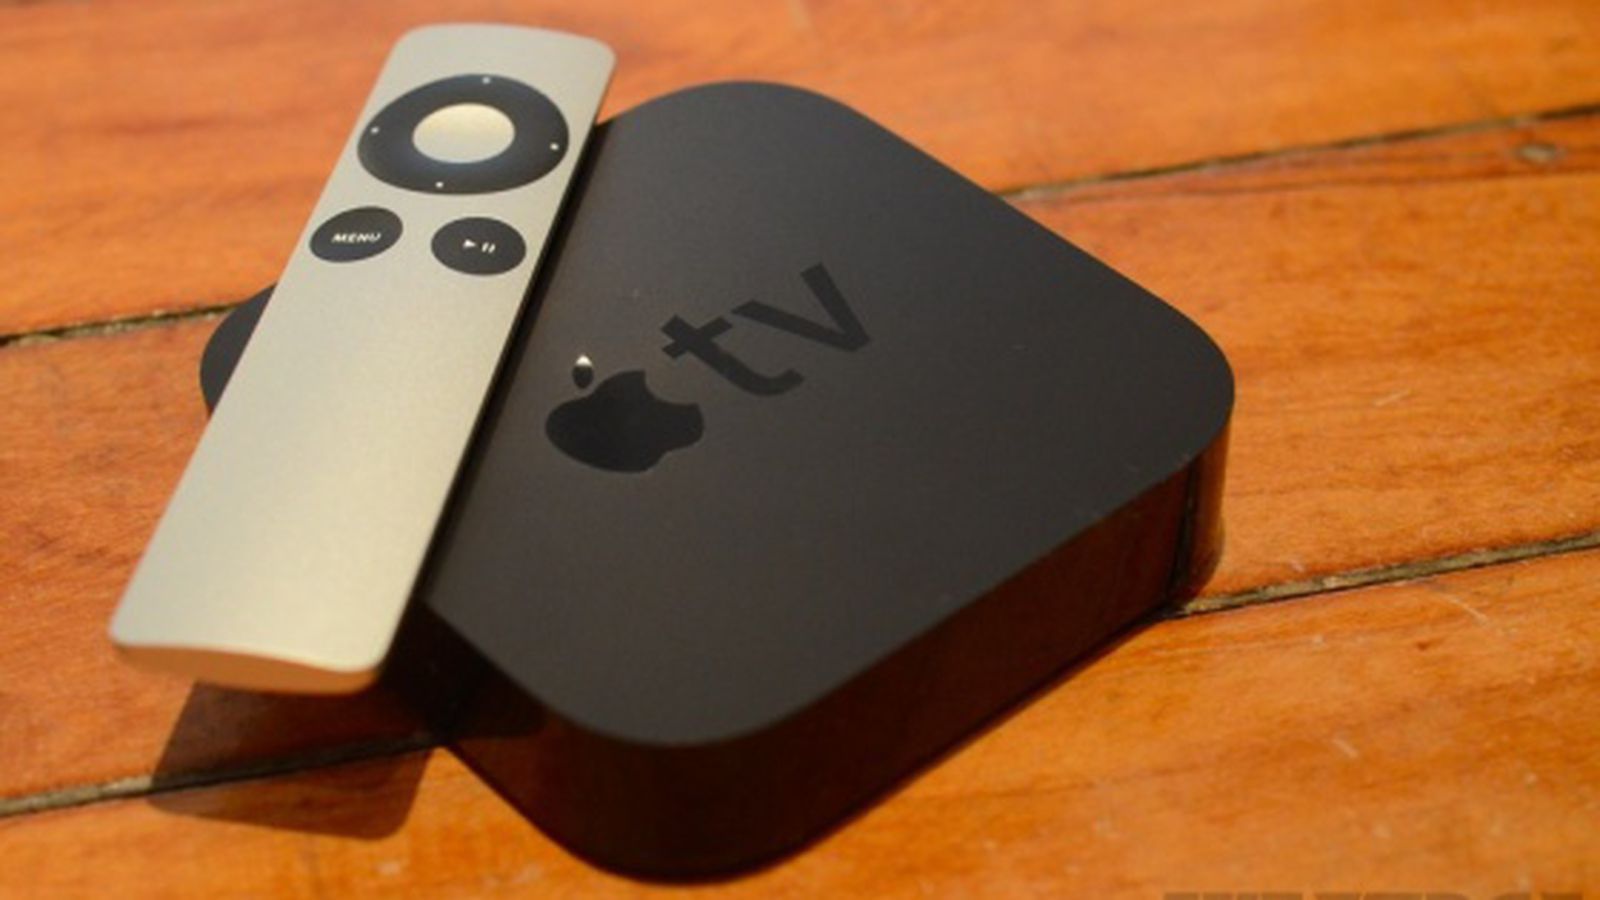 Apple TV 3rd Generation Like New